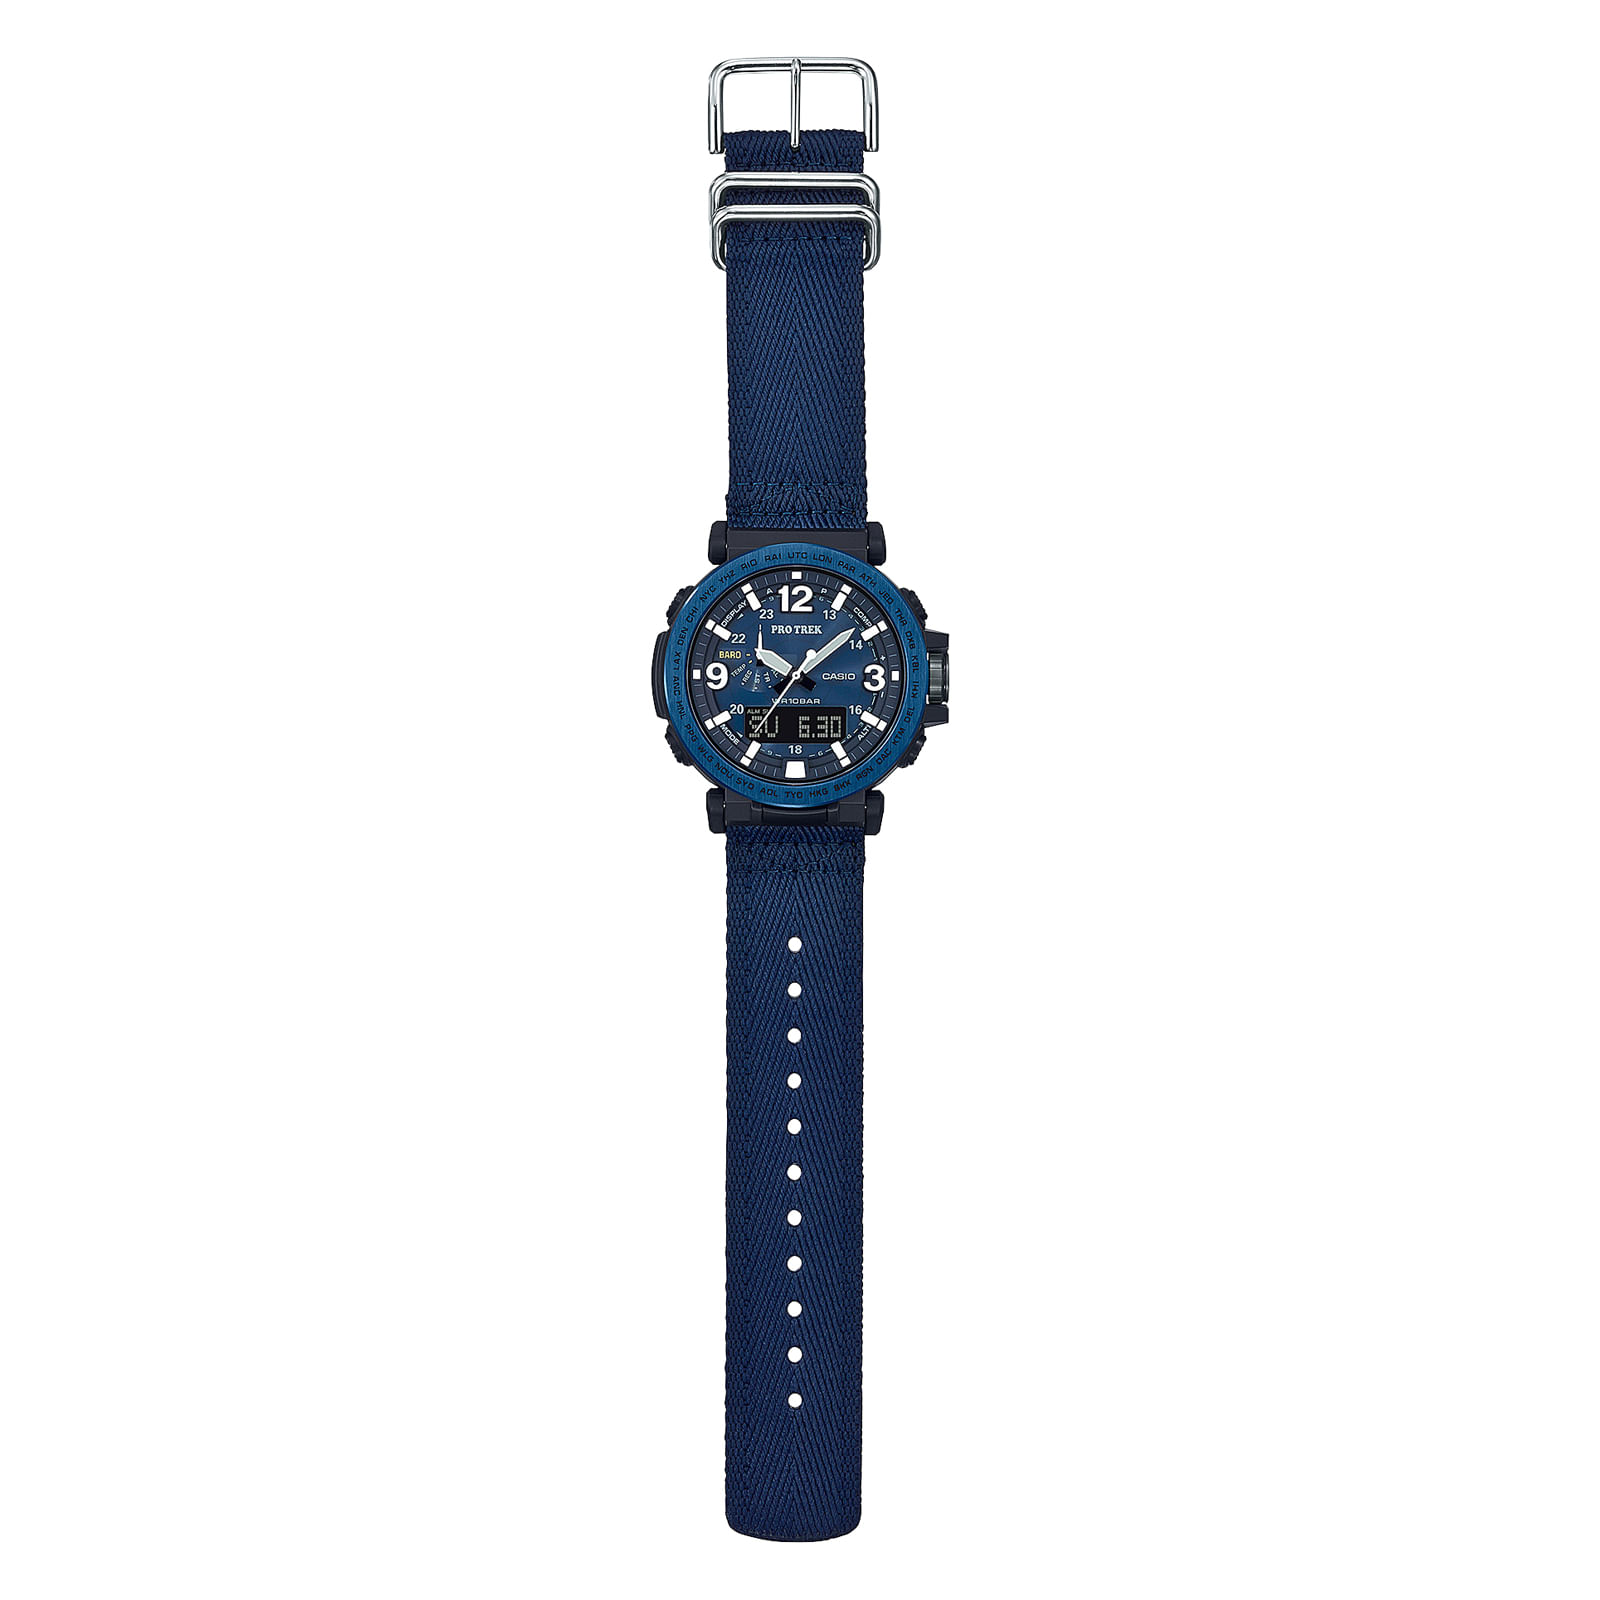 Reloj CASIO PROTREK PRG-600YB-2D Acero Hombre Azul